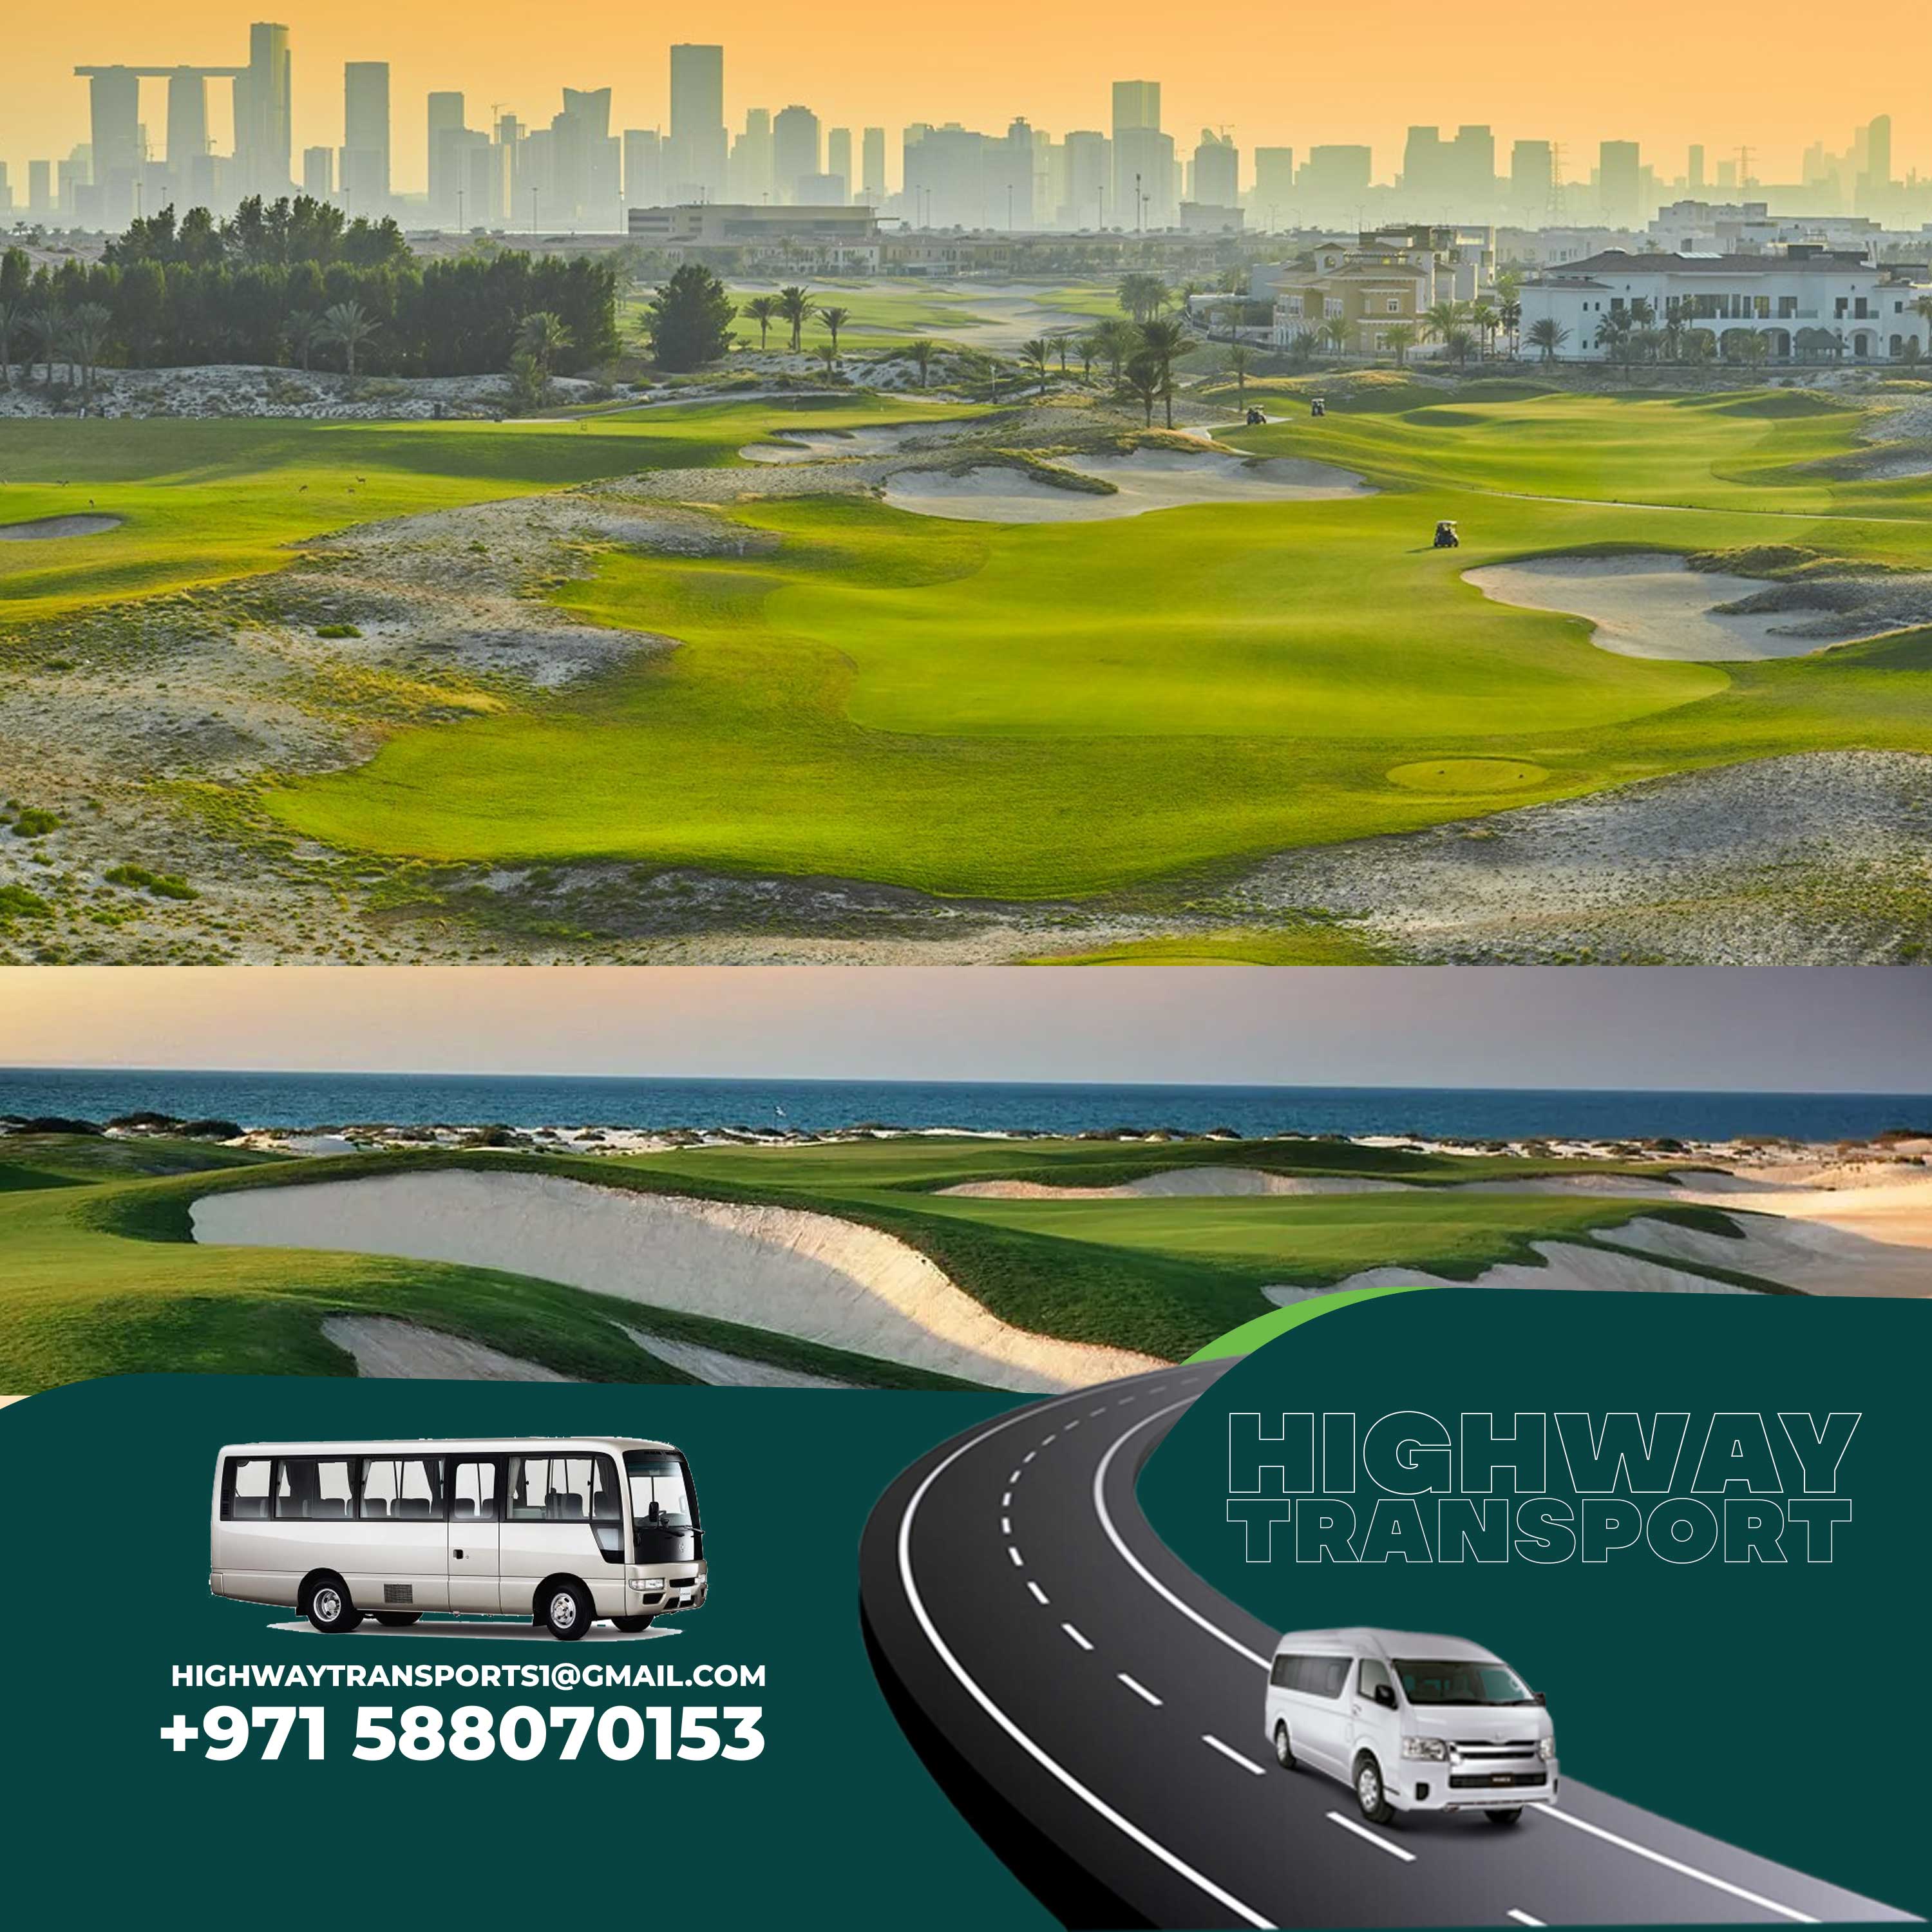 Saadiyat Beach Golf Club image showcasing membership options, rates, course design, and facilities